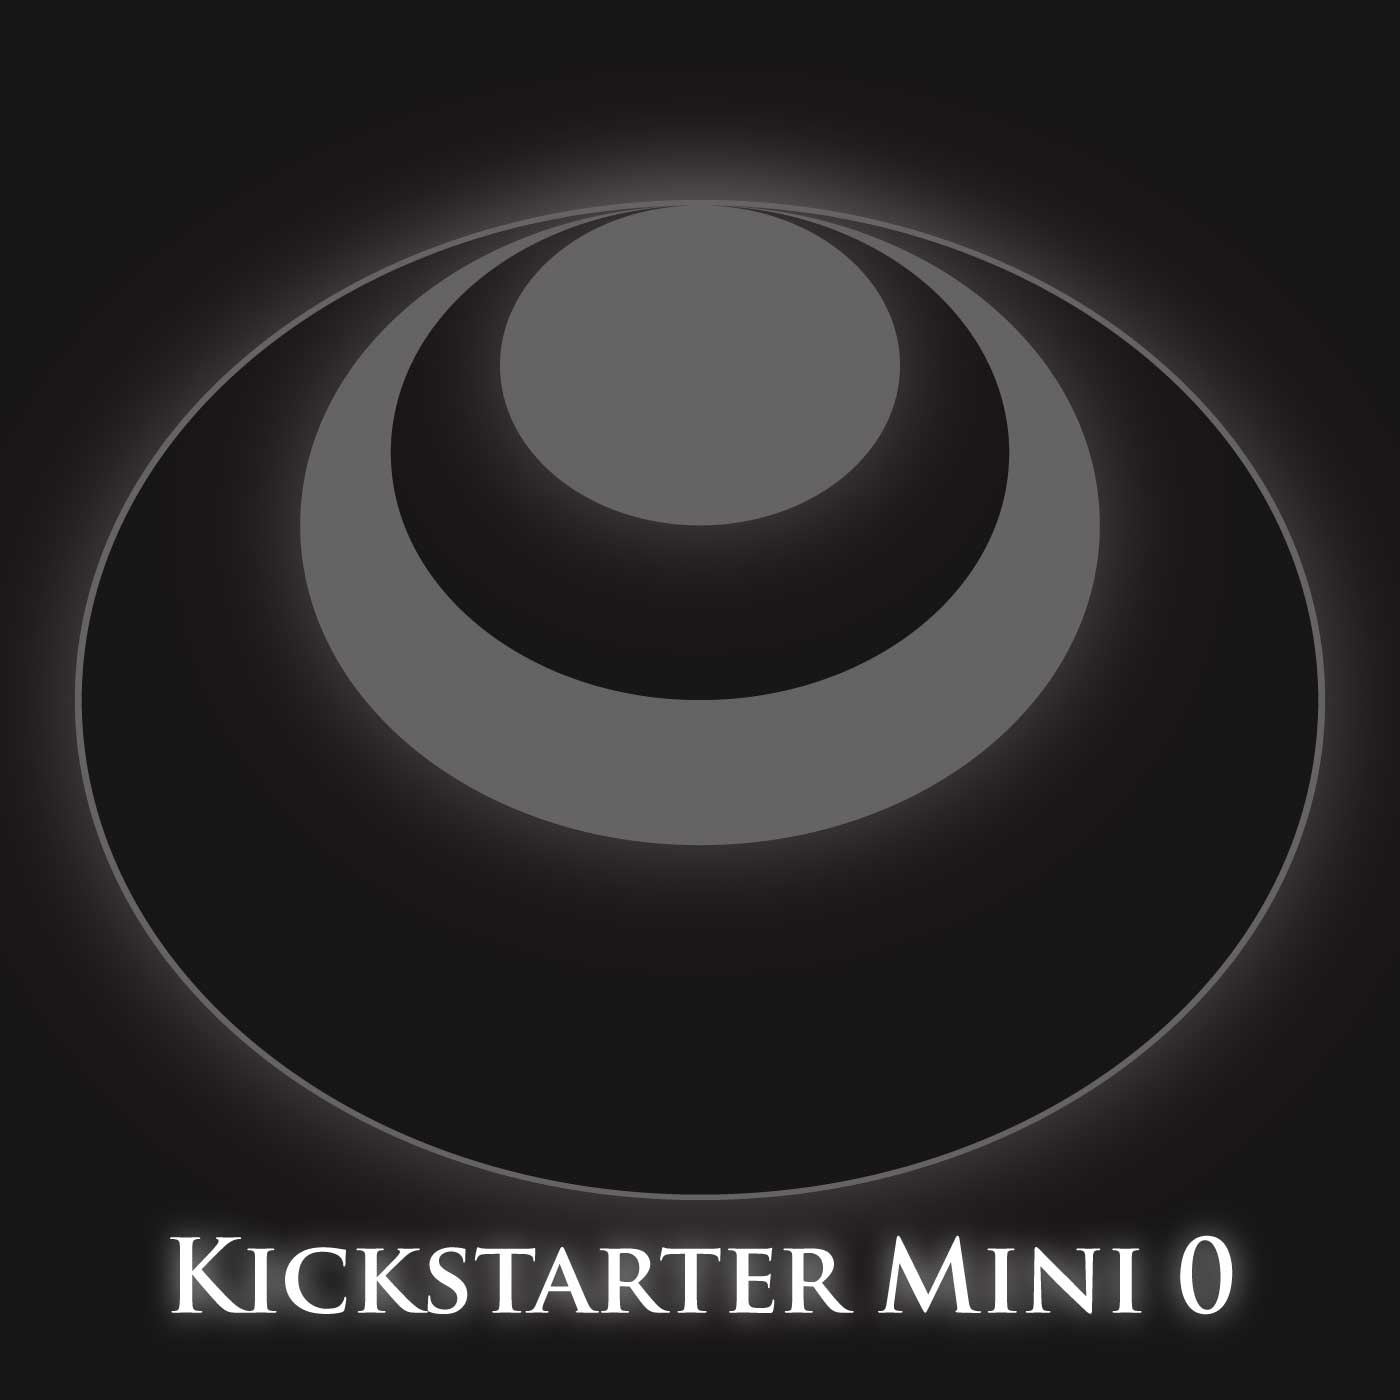 Kickstarter Mini 0